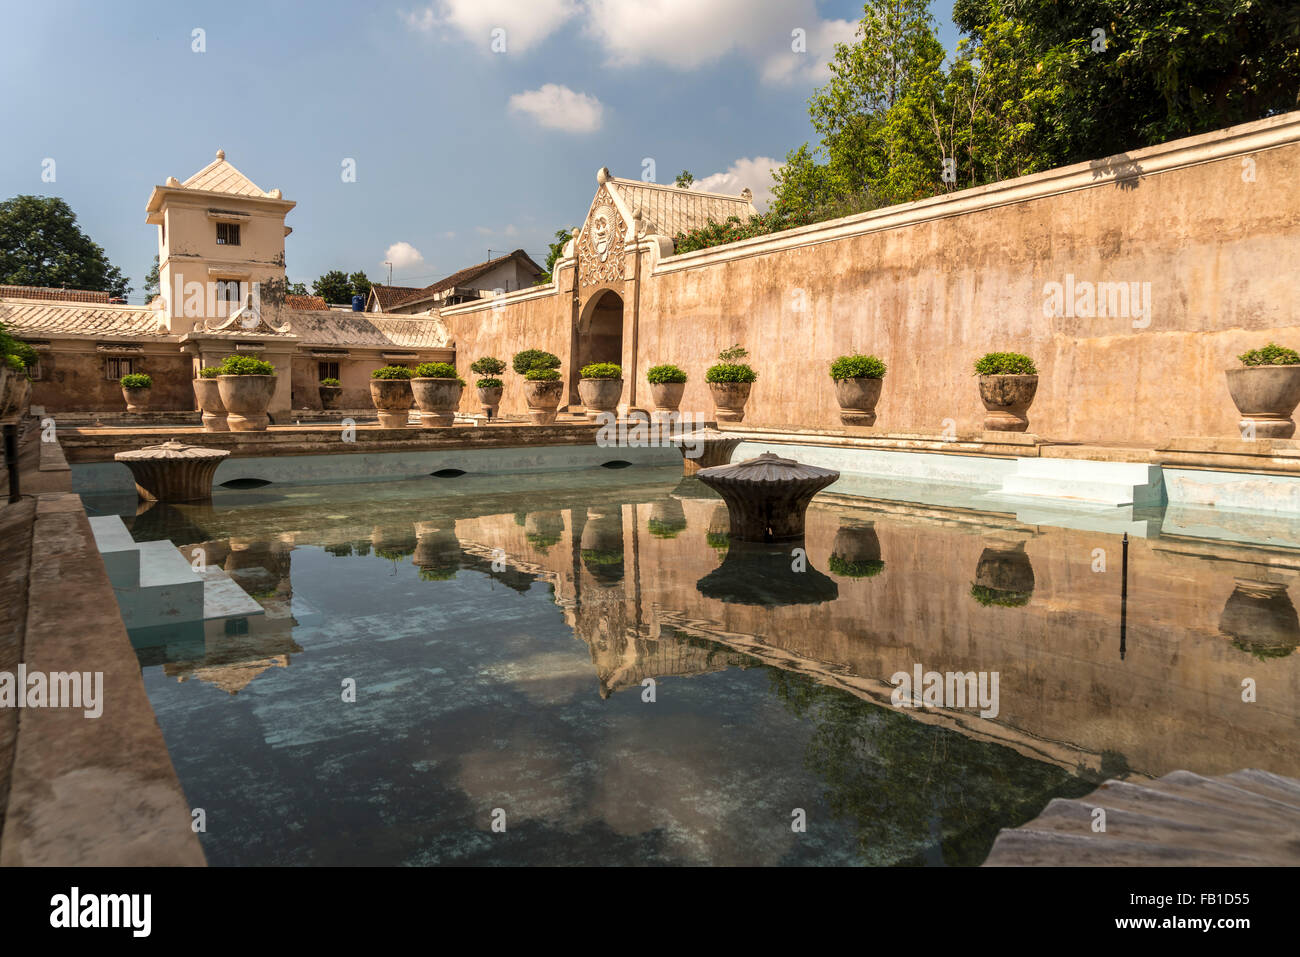 Vasca da bagno,Taman Sari castello d'acqua, Yogyakarta, Java, Indonesia, Asia Foto Stock